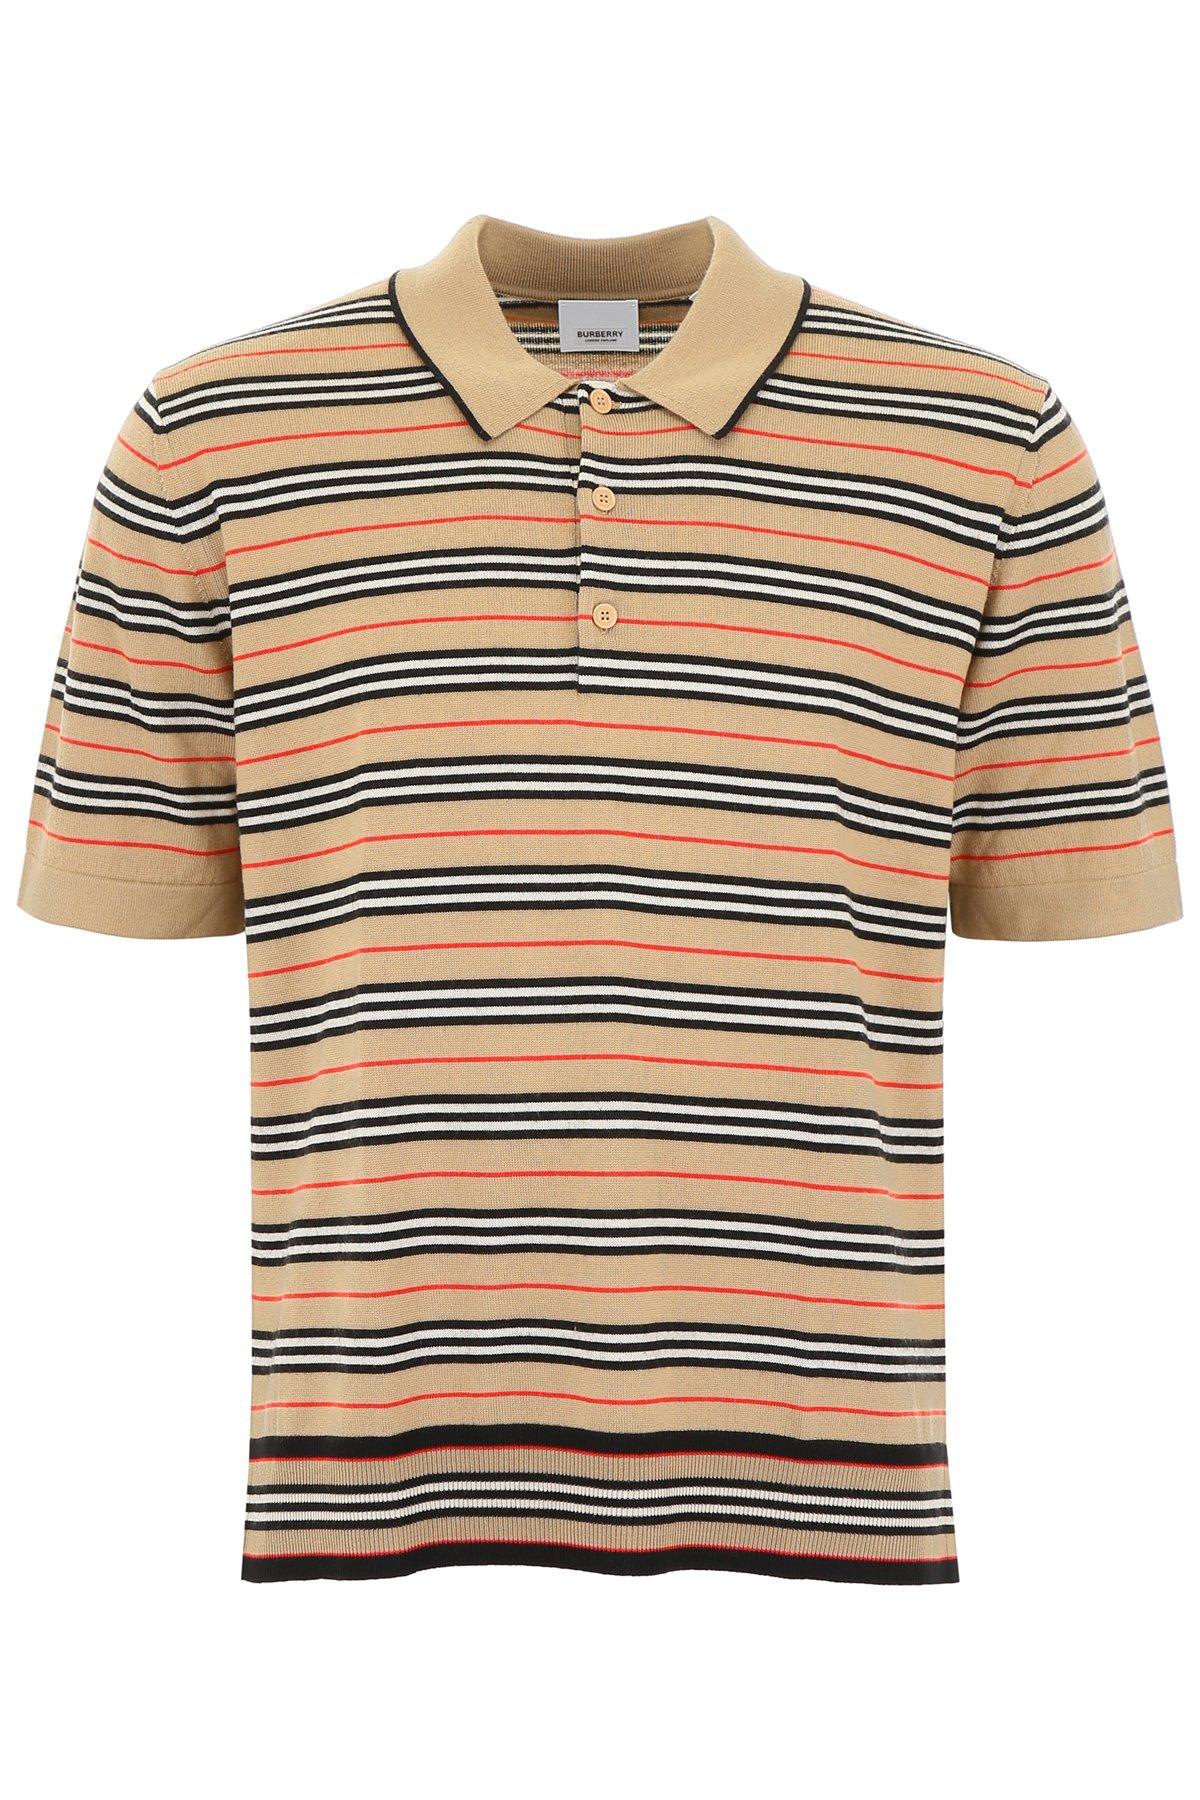 Burberry Icon Stripe Merino Polo Shirt for Men - Lyst